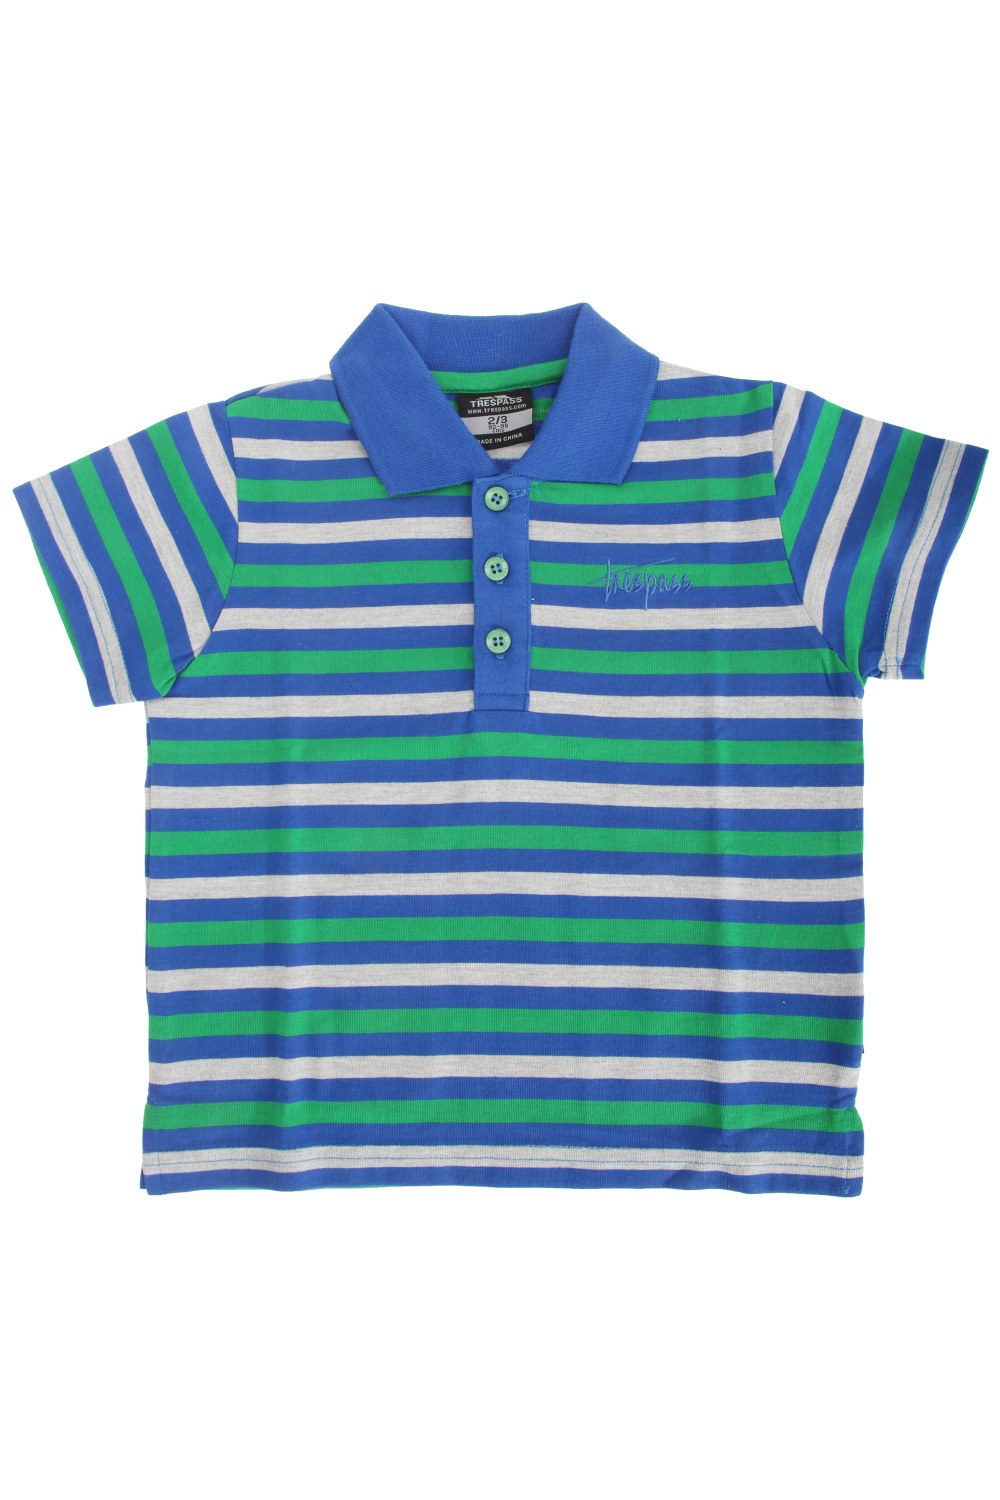 Trespass Childrens Boys Garth Striped Polo Shirt